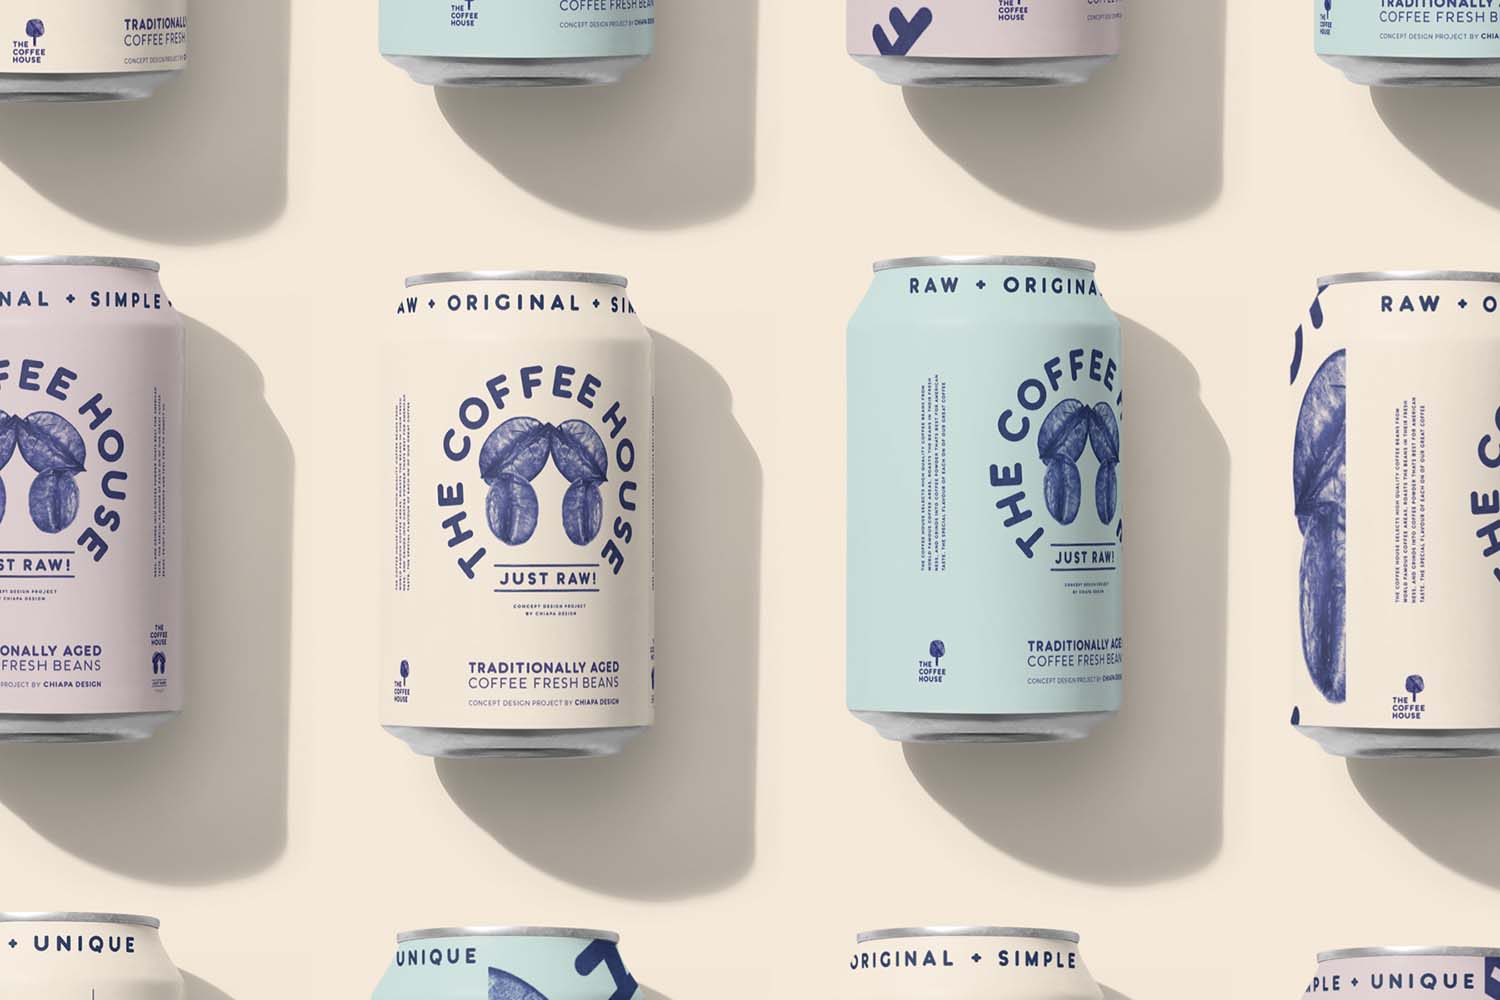 The Coffee House Branding by Chiapa Design Team is Winner in Packaging Design Category, 2022 - 2023.